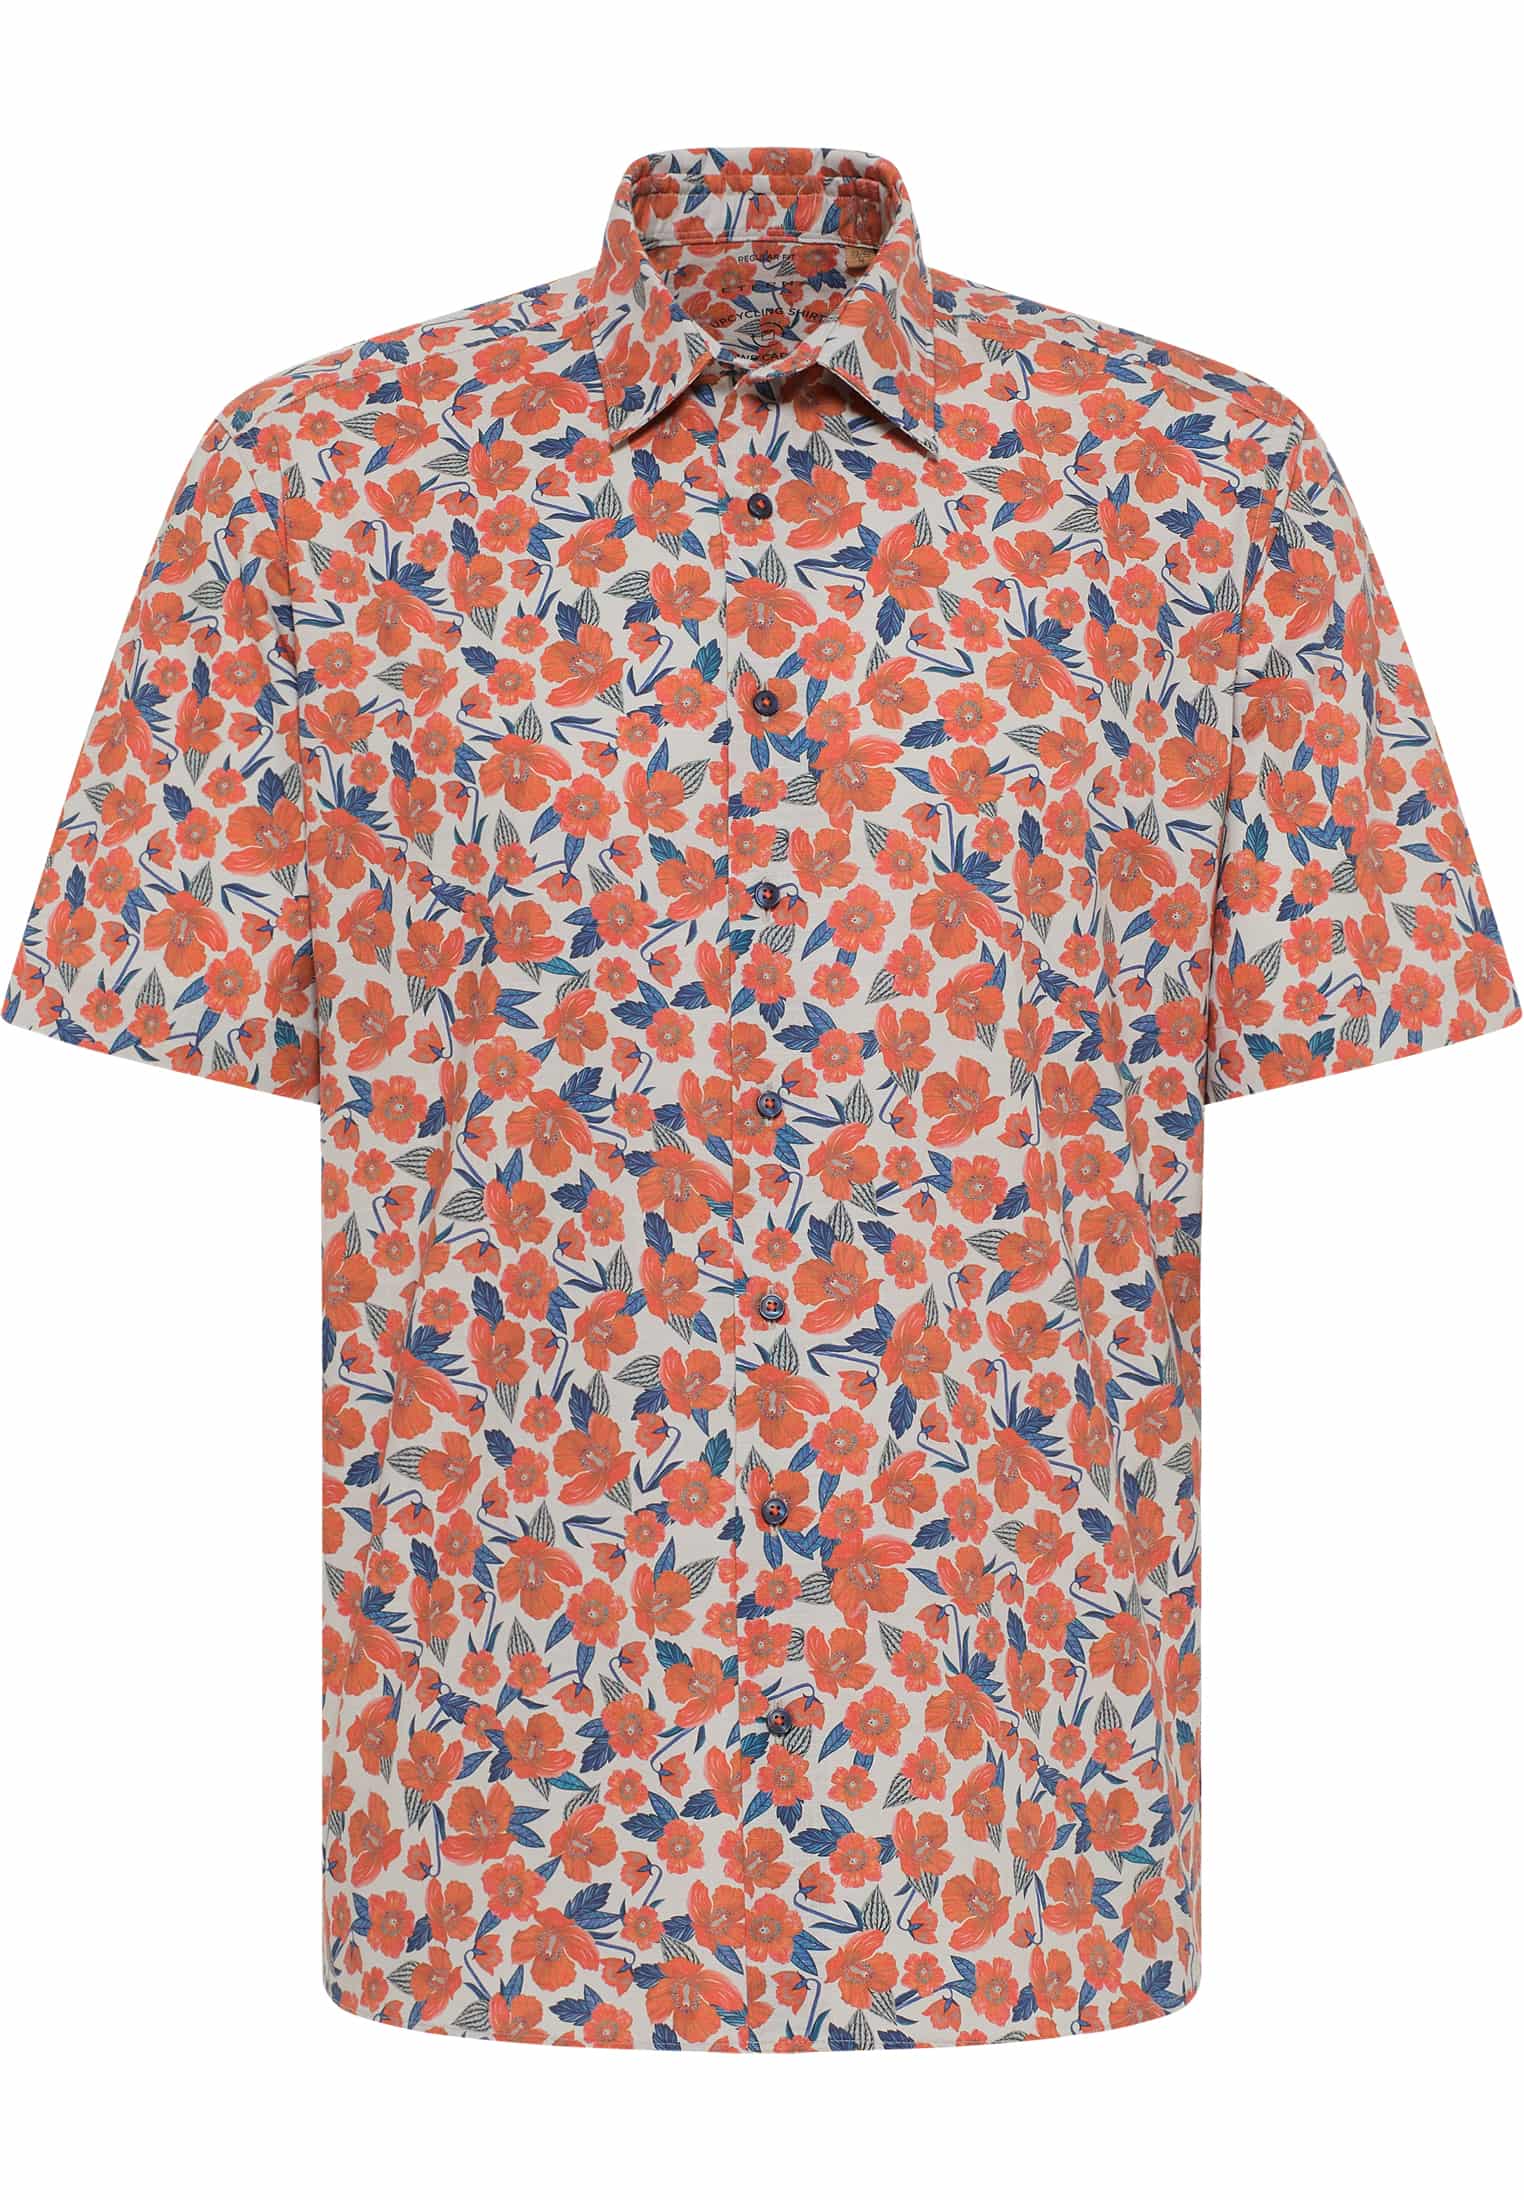 REGULAR FIT Shirt in orange printed